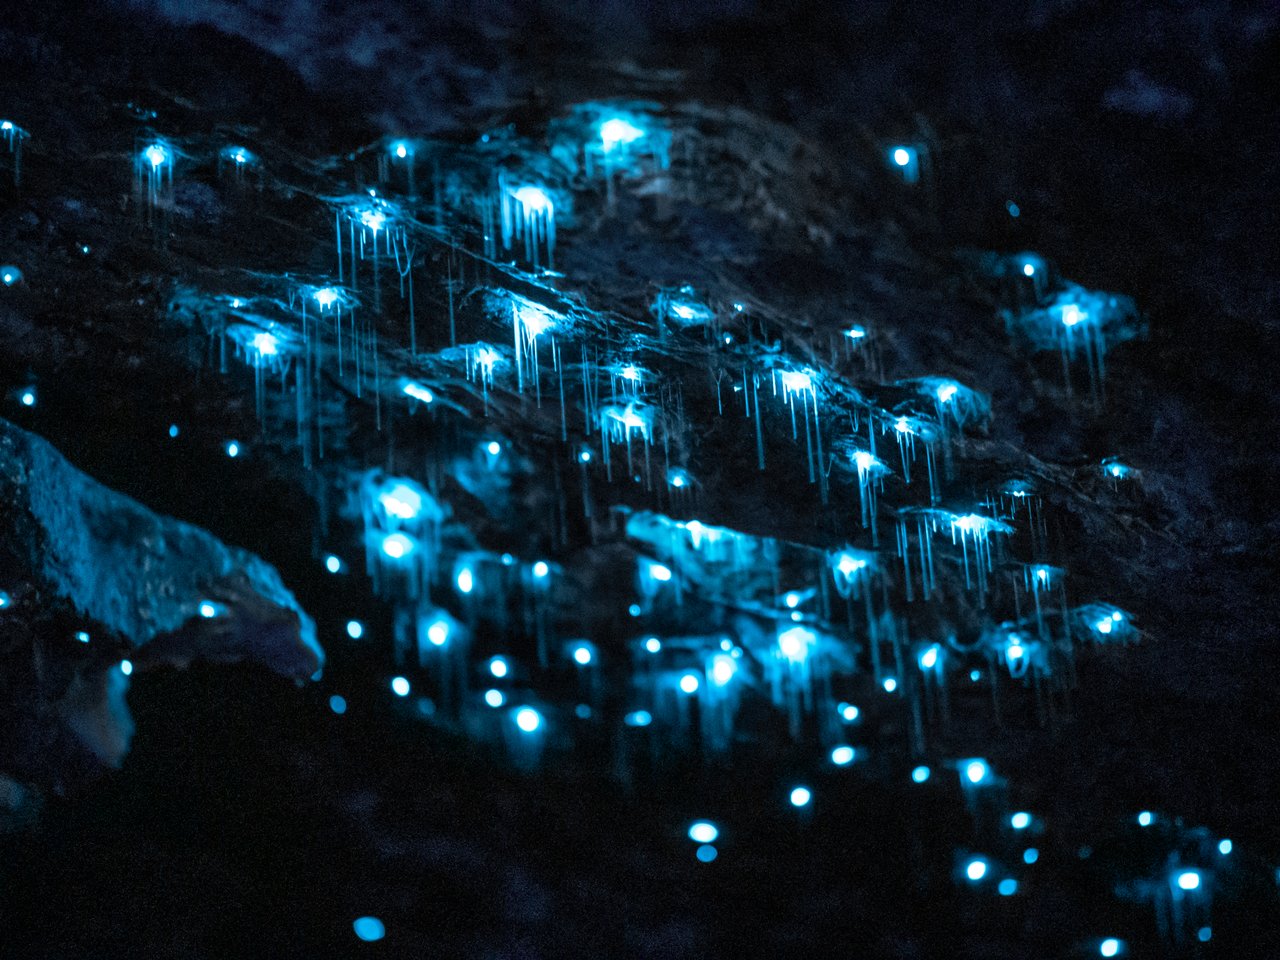 Glowworms shining bright inside caves